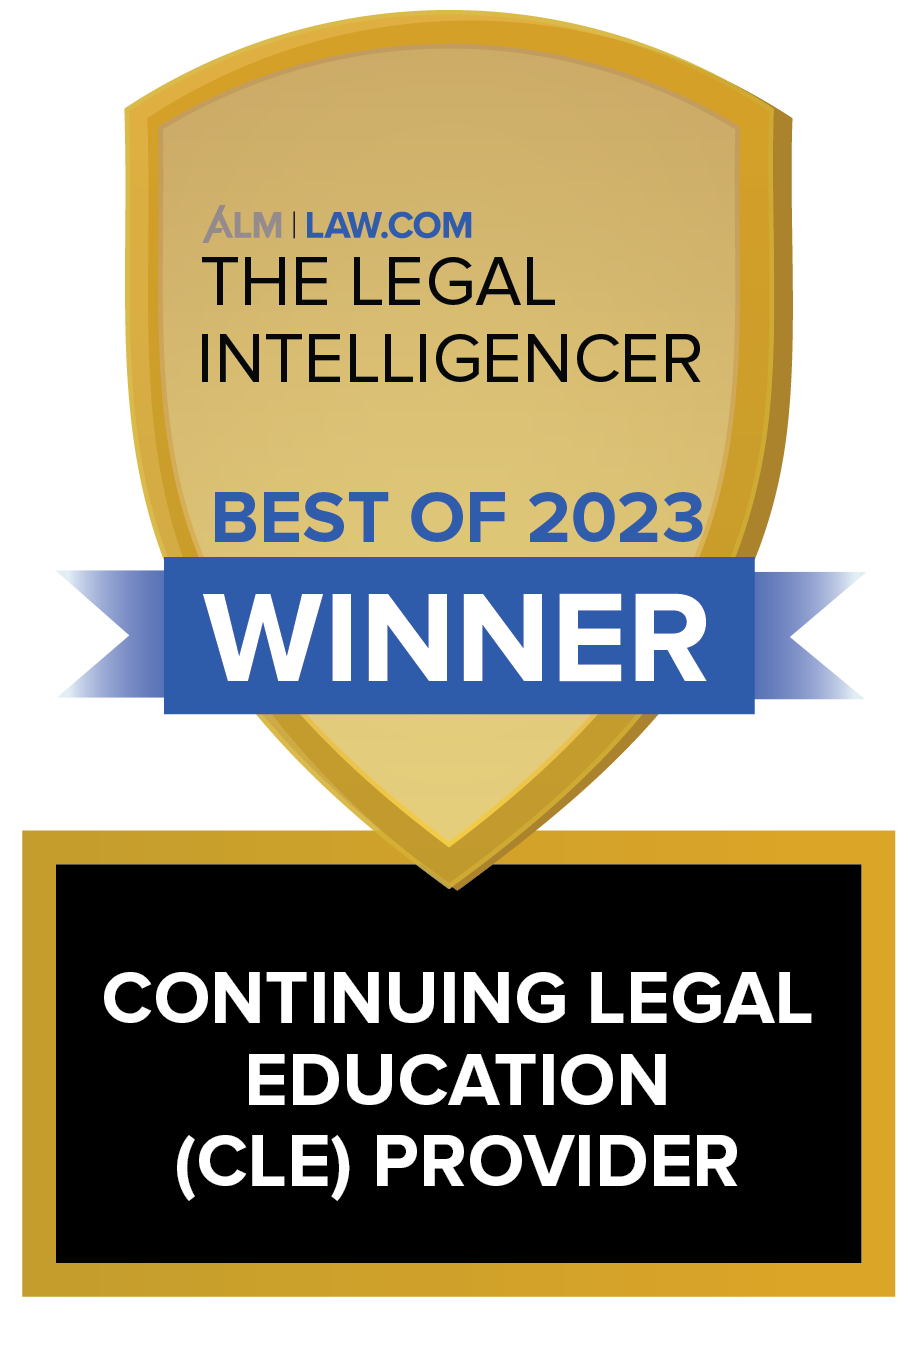 The Legal Intelligencer Best of 2023: WINNER - Best CLE Provider